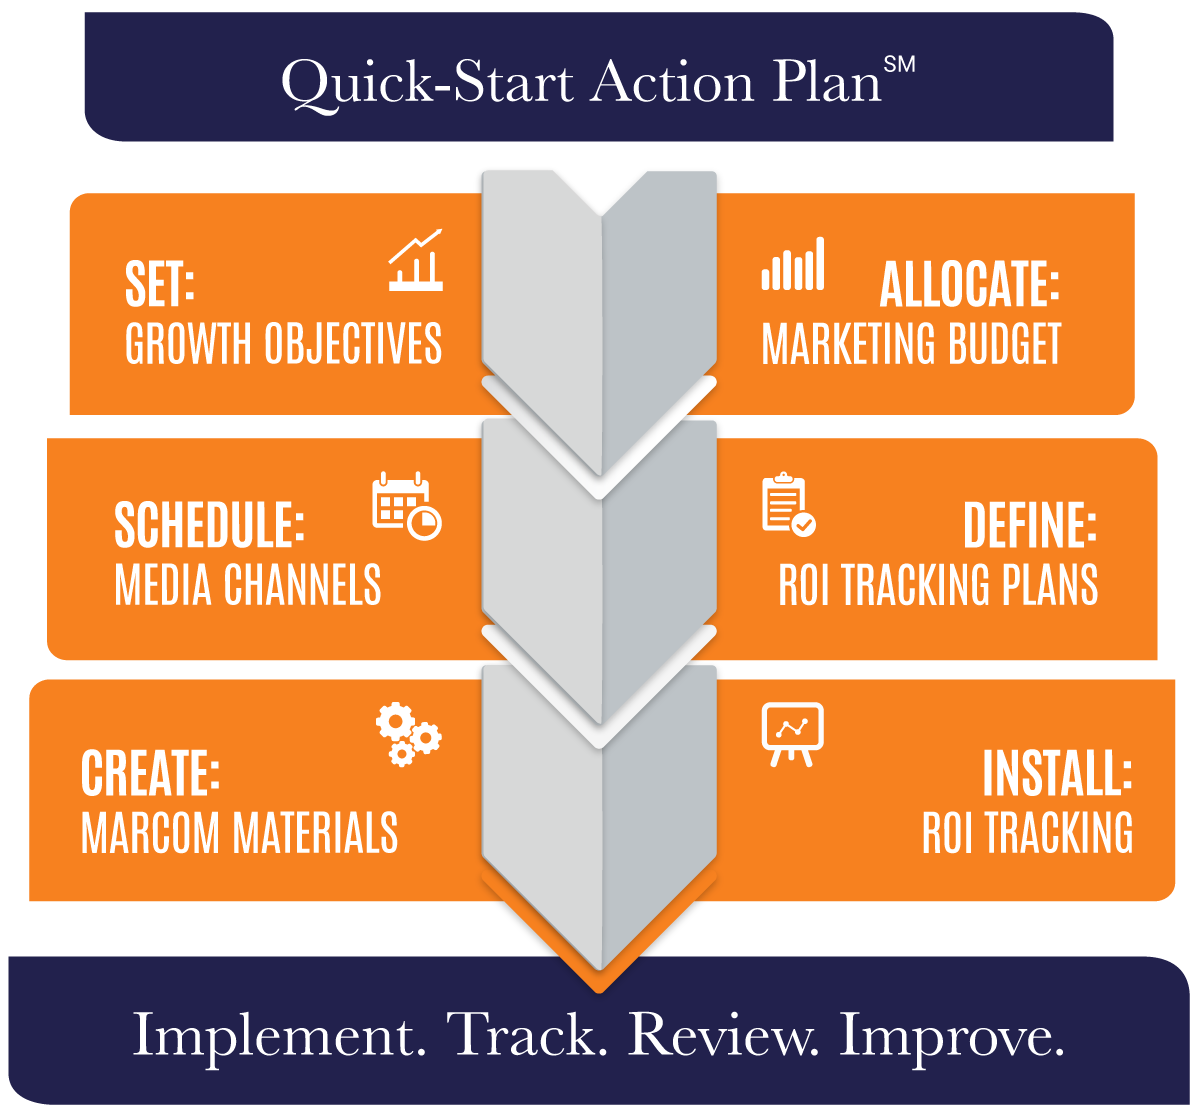 Quenzel Marketing Agency | Quick-Start Marketing Action Plan